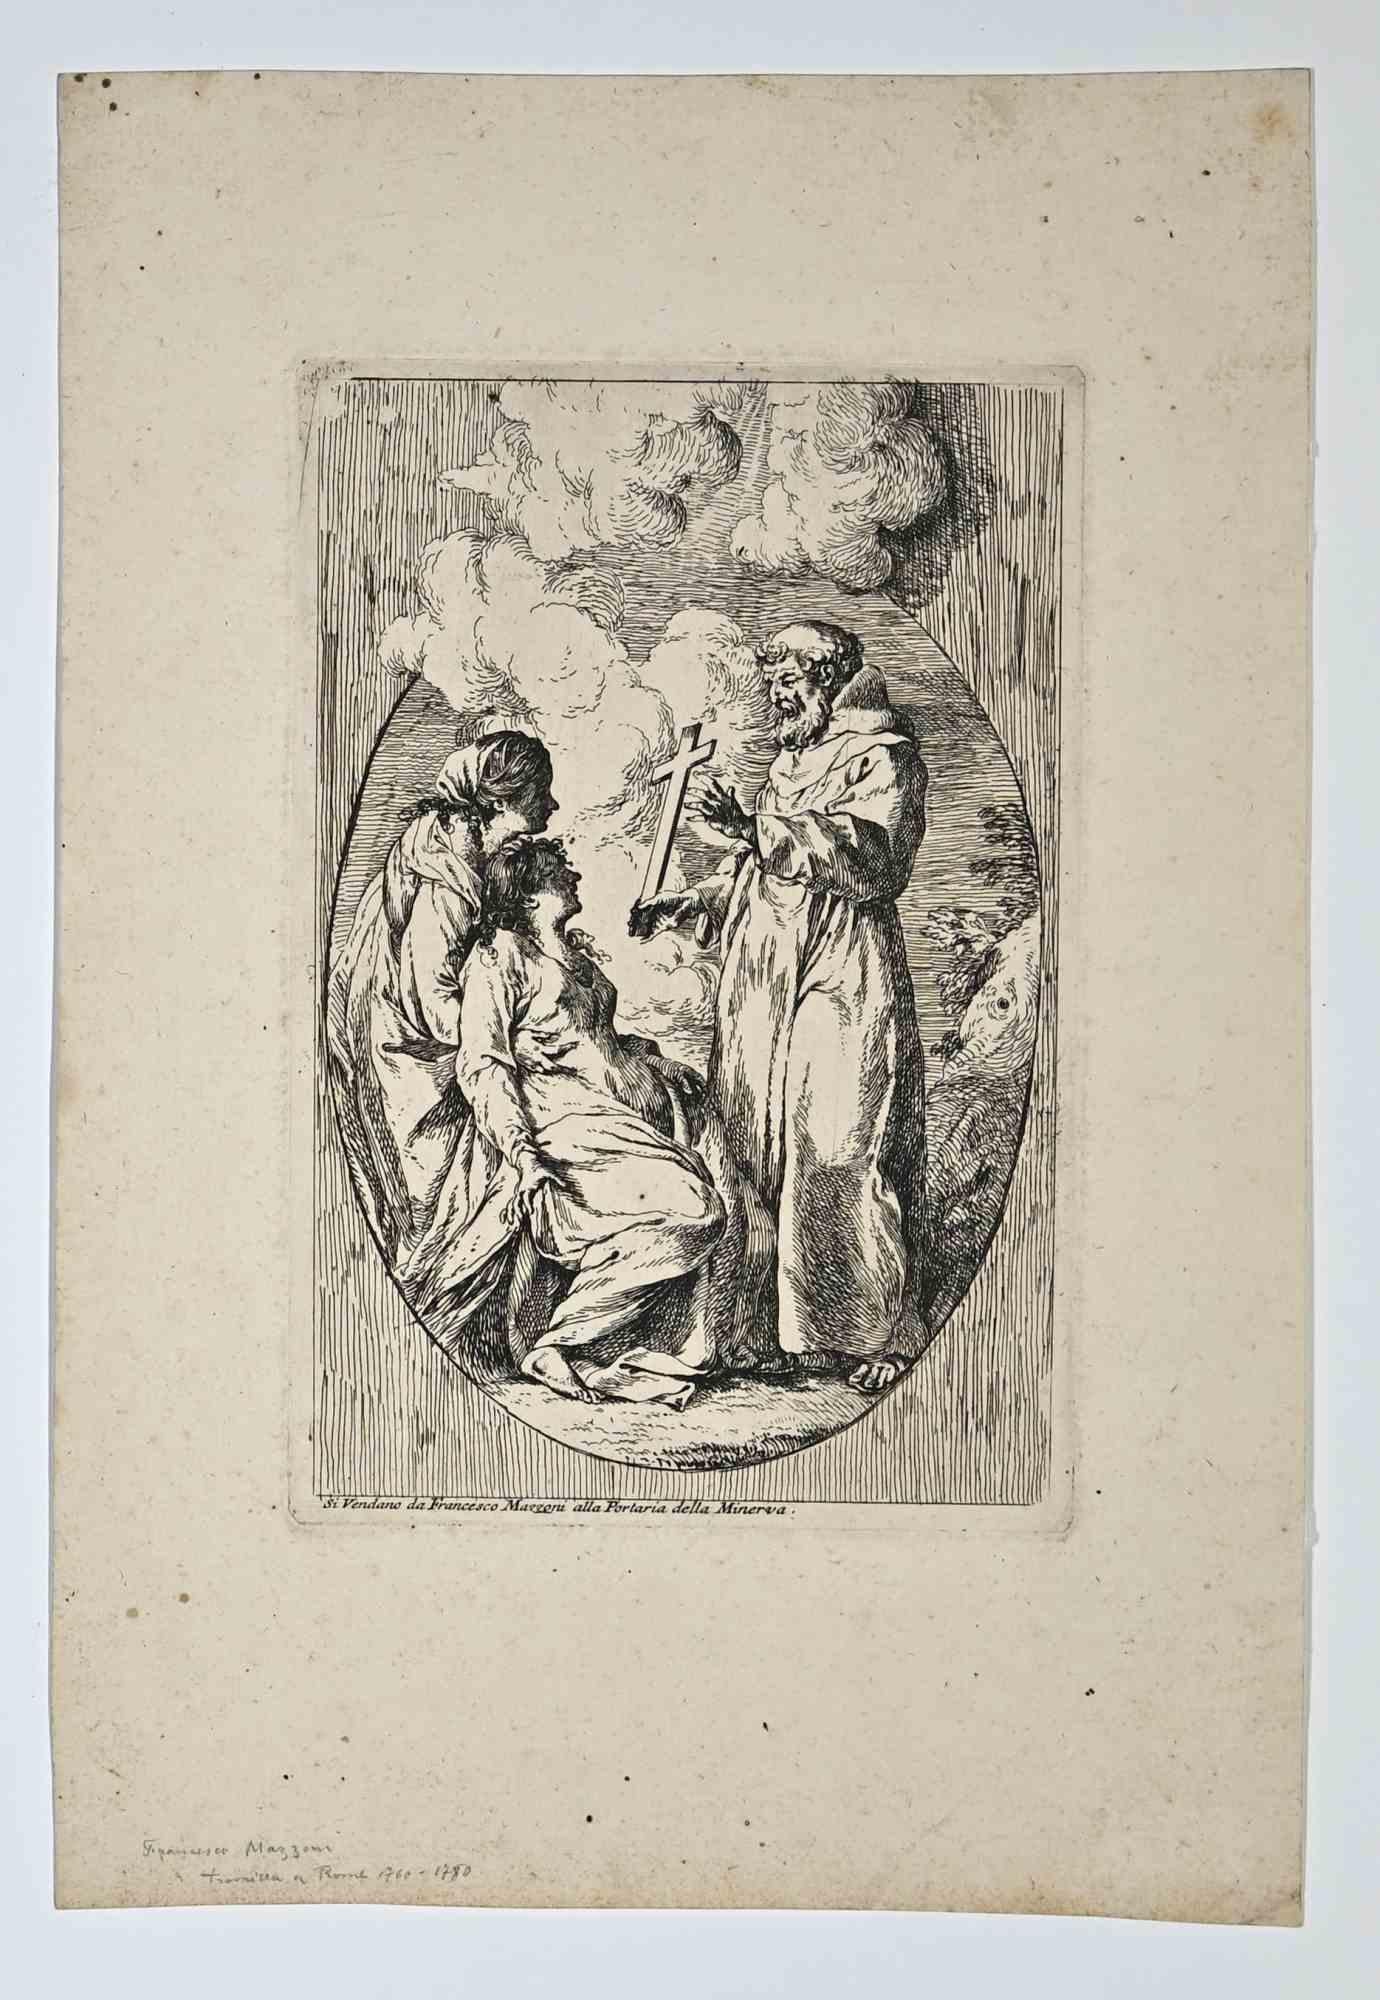 Figurative Print Nicola Vanni - Axiom - Gravure de Francesco Mazzoni - 18ème siècle